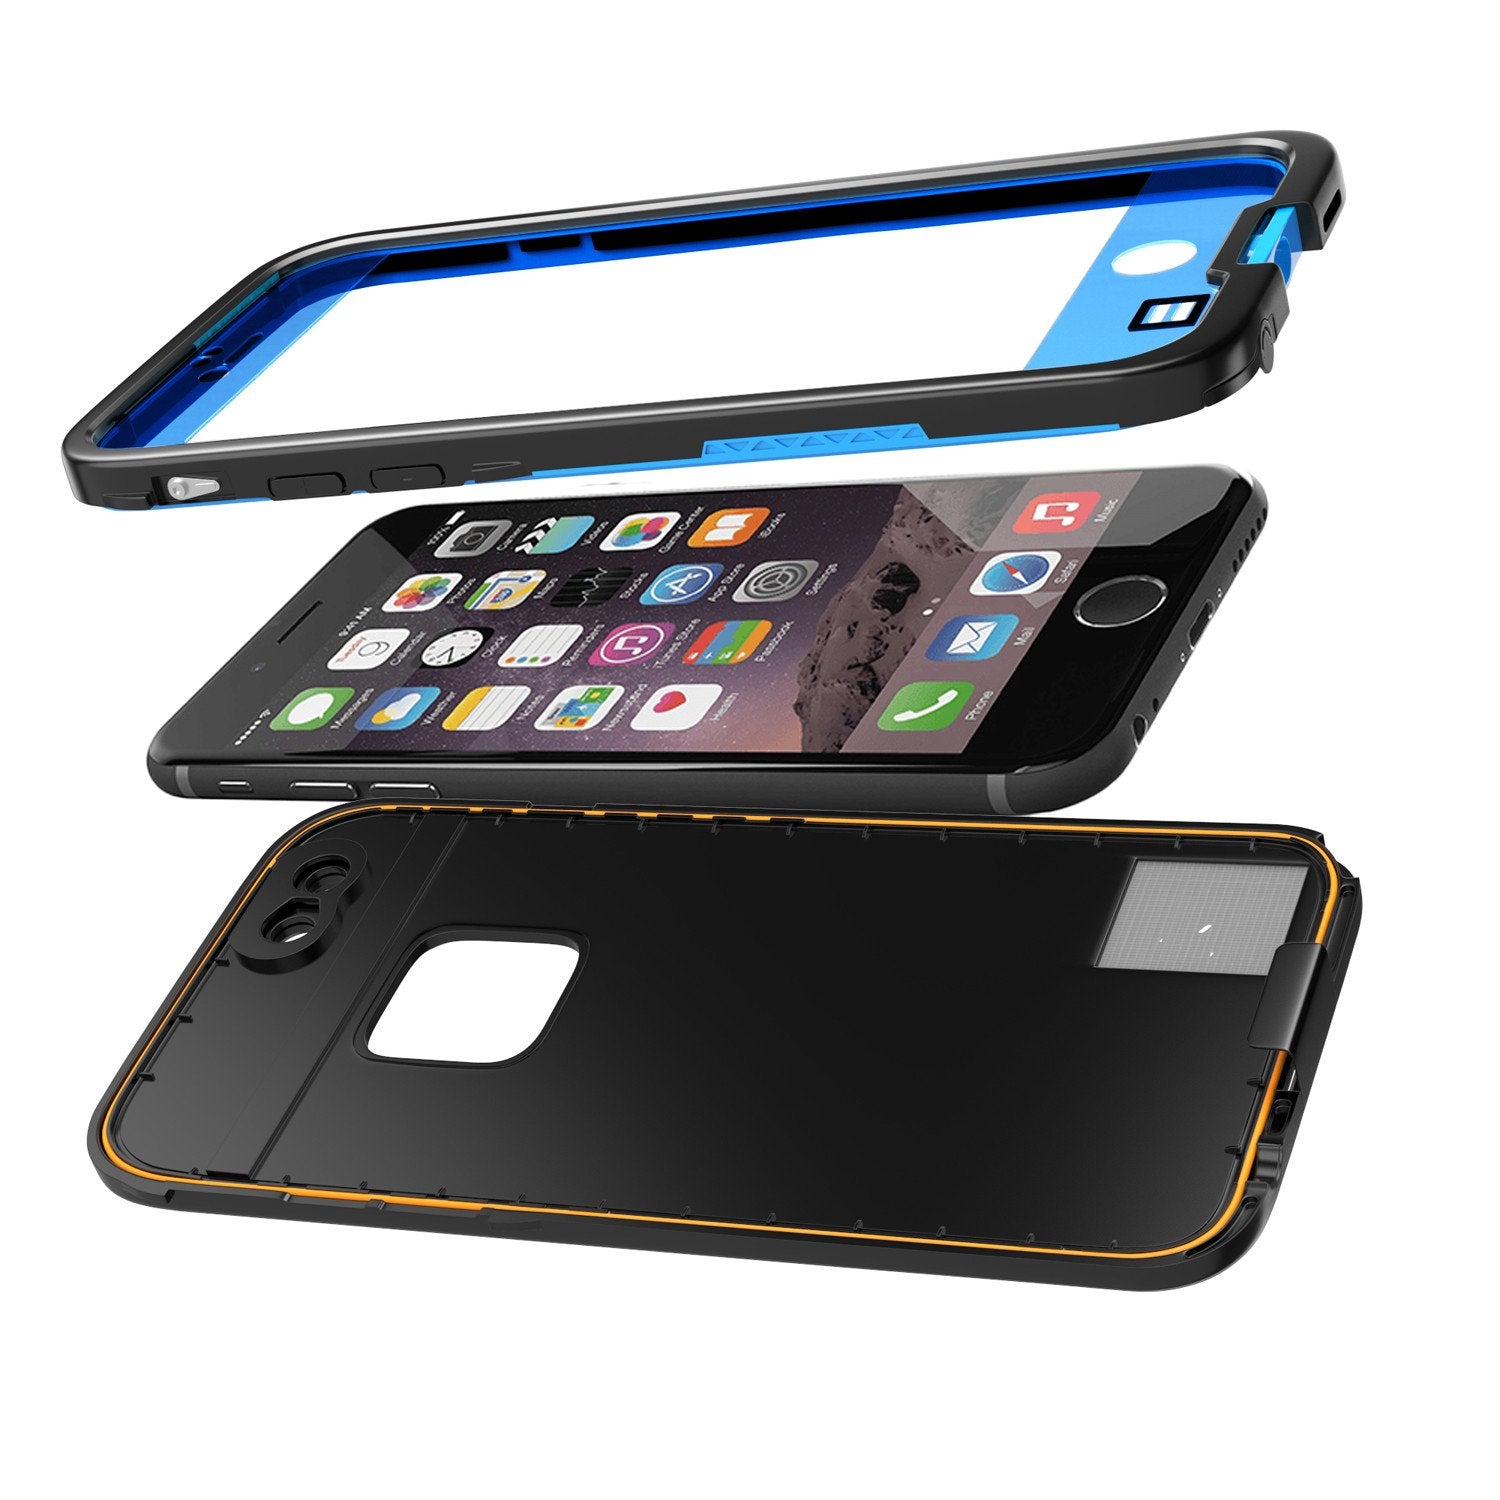 iPhone 6S+/6+ Plus Waterproof Case, Punkcase SpikeStar Light Blue | Thin Fit 6.6ft Underwater IP68